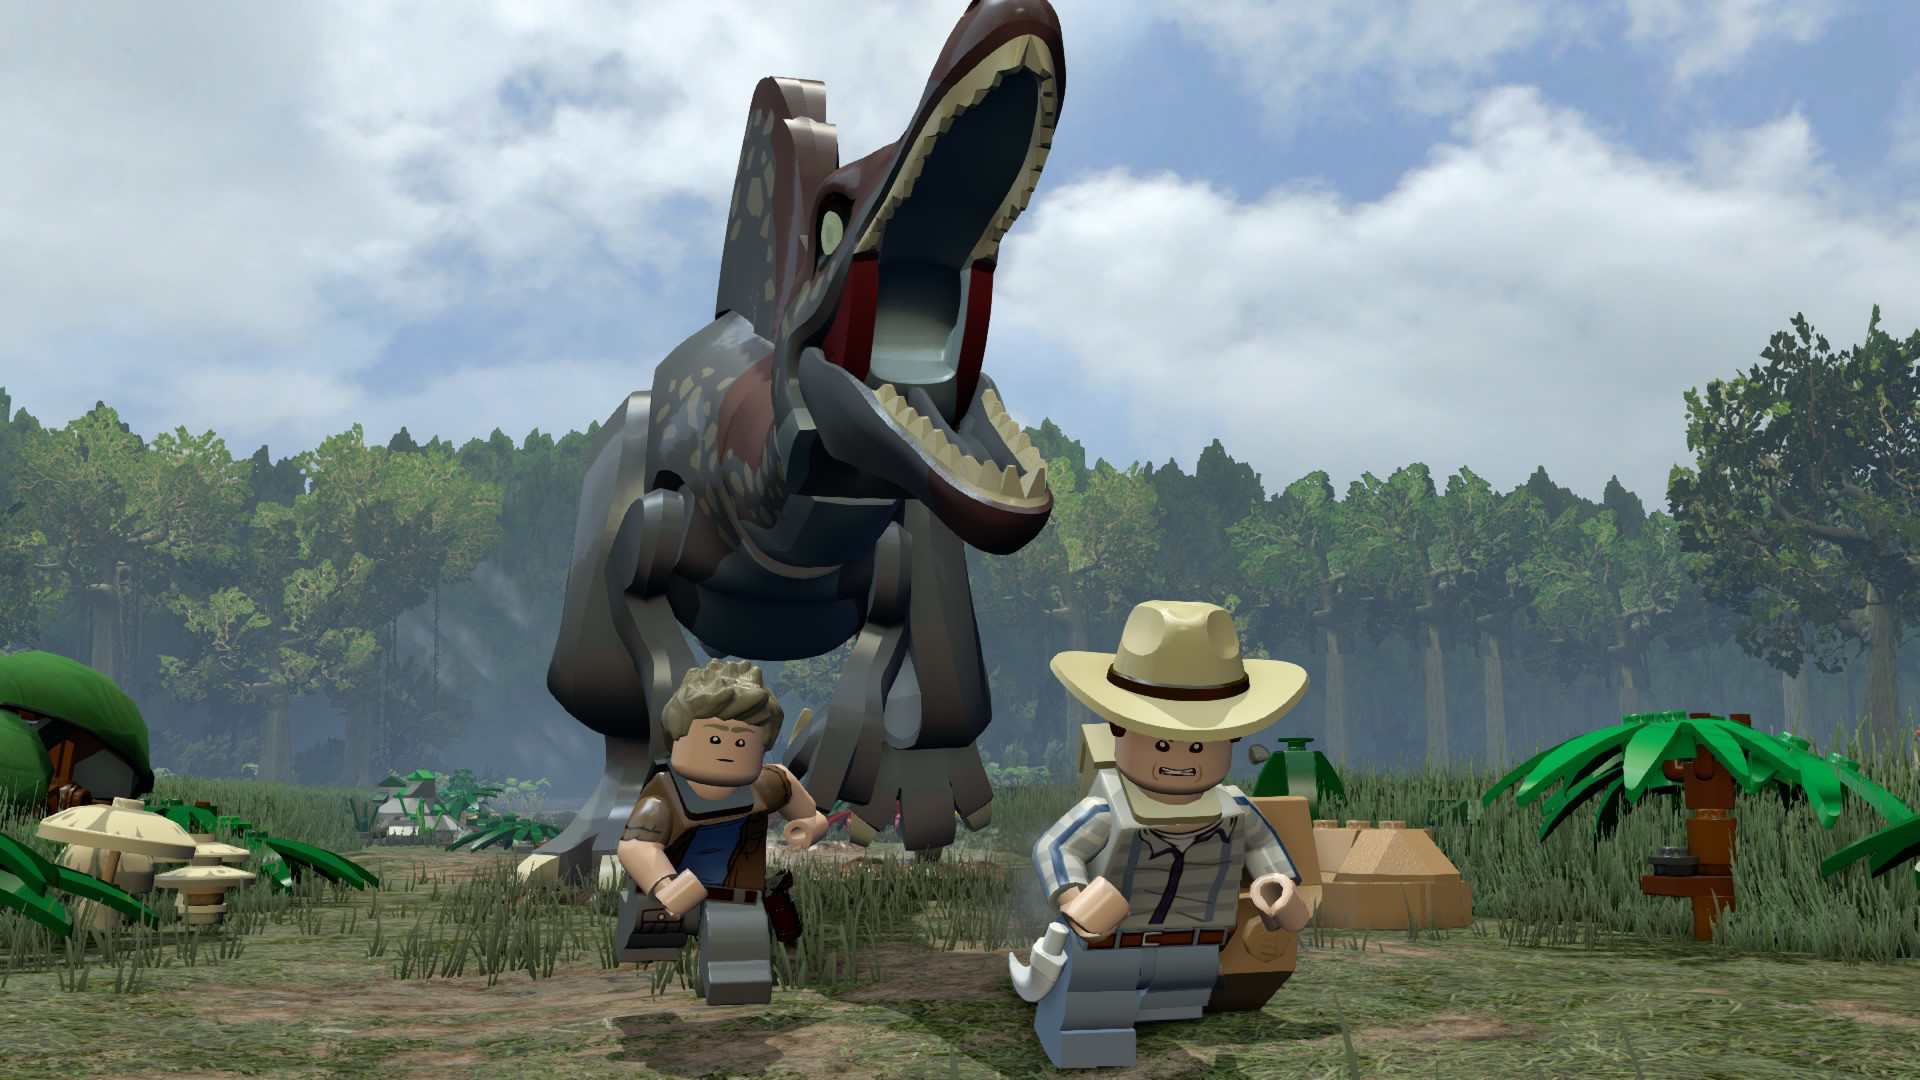 🌍 LEGO Jurassic World XBOX ONE / SERIES X | S / KEY 🔑